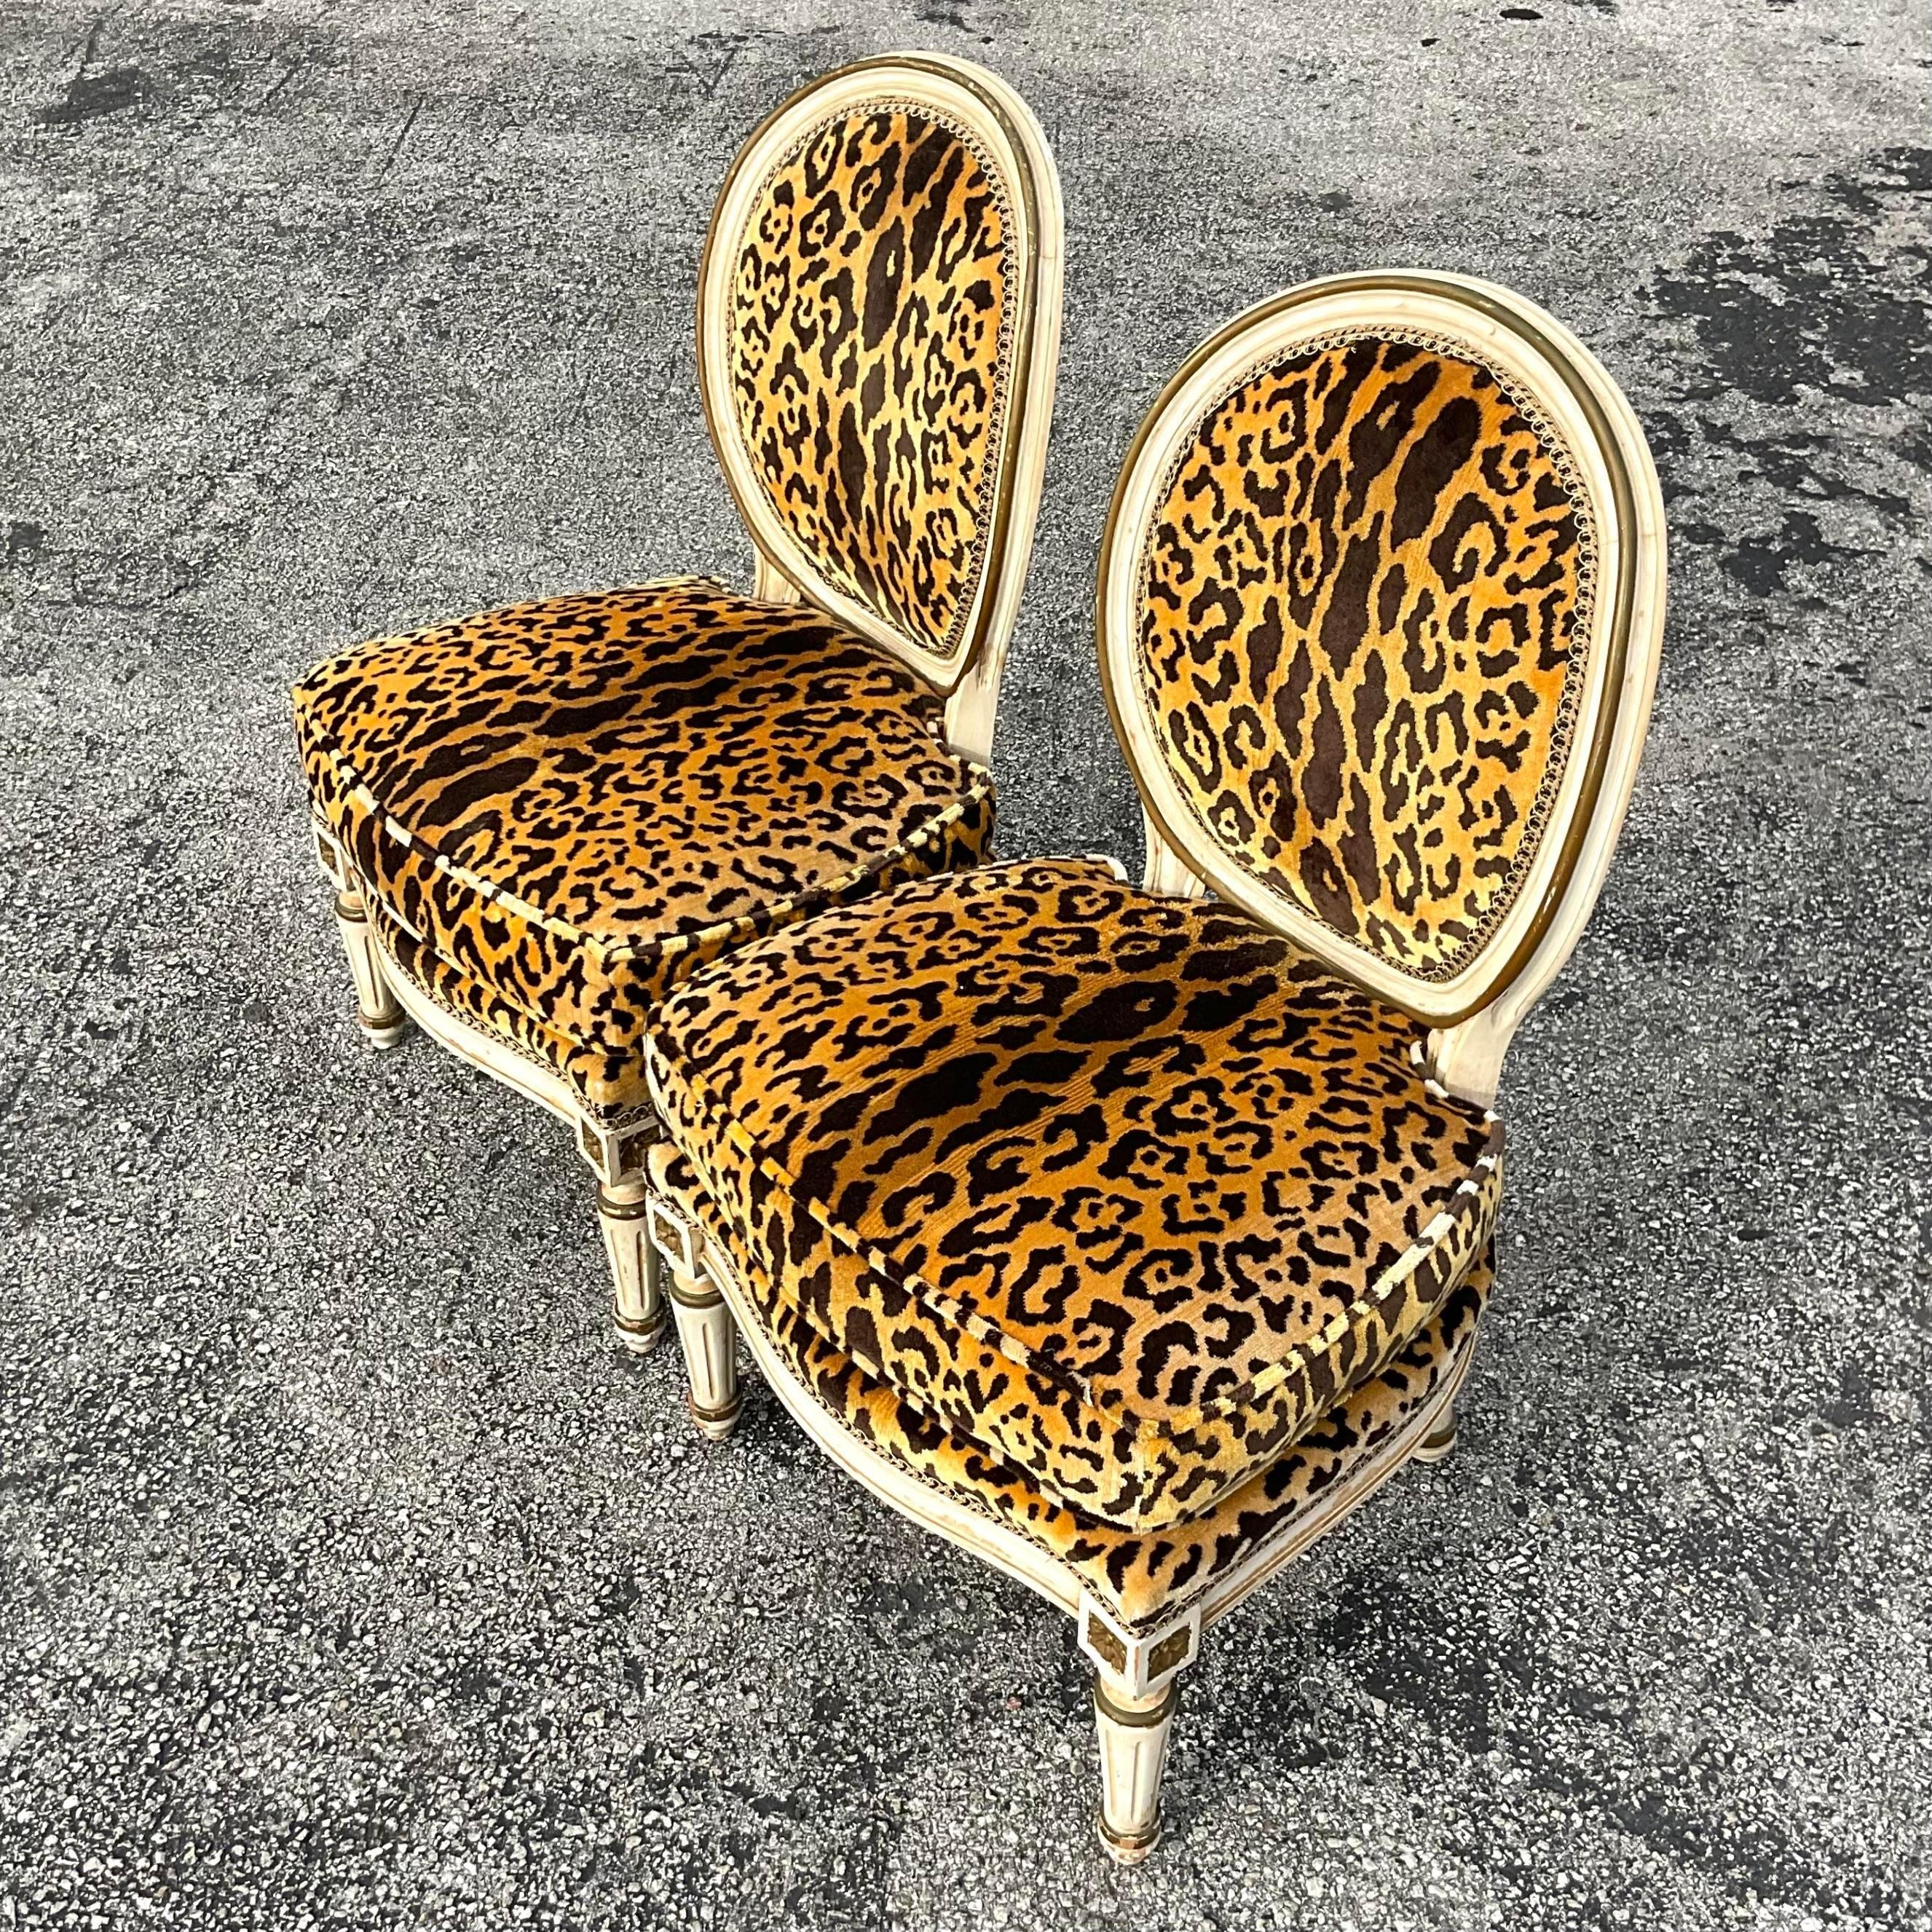 Vintage Regency Louis XI Style Leopard Slipper Chairs - a Pair 3